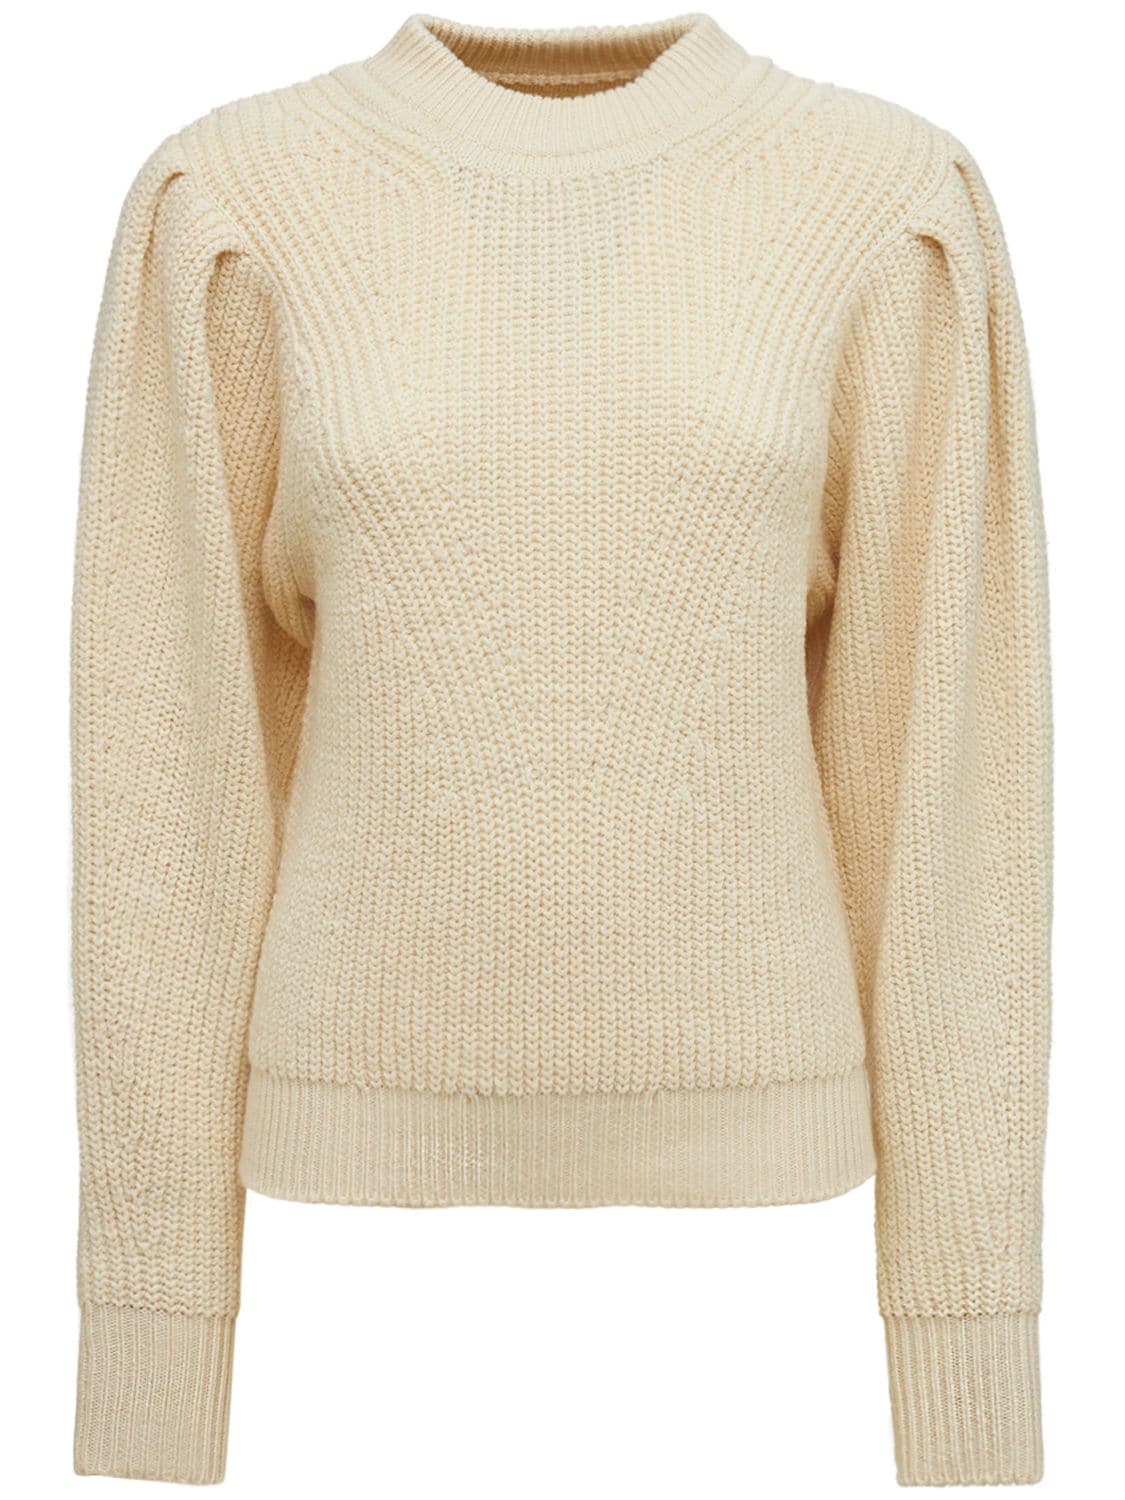 ISABEL MARANT Adele Cotton Blend Knit Sweater